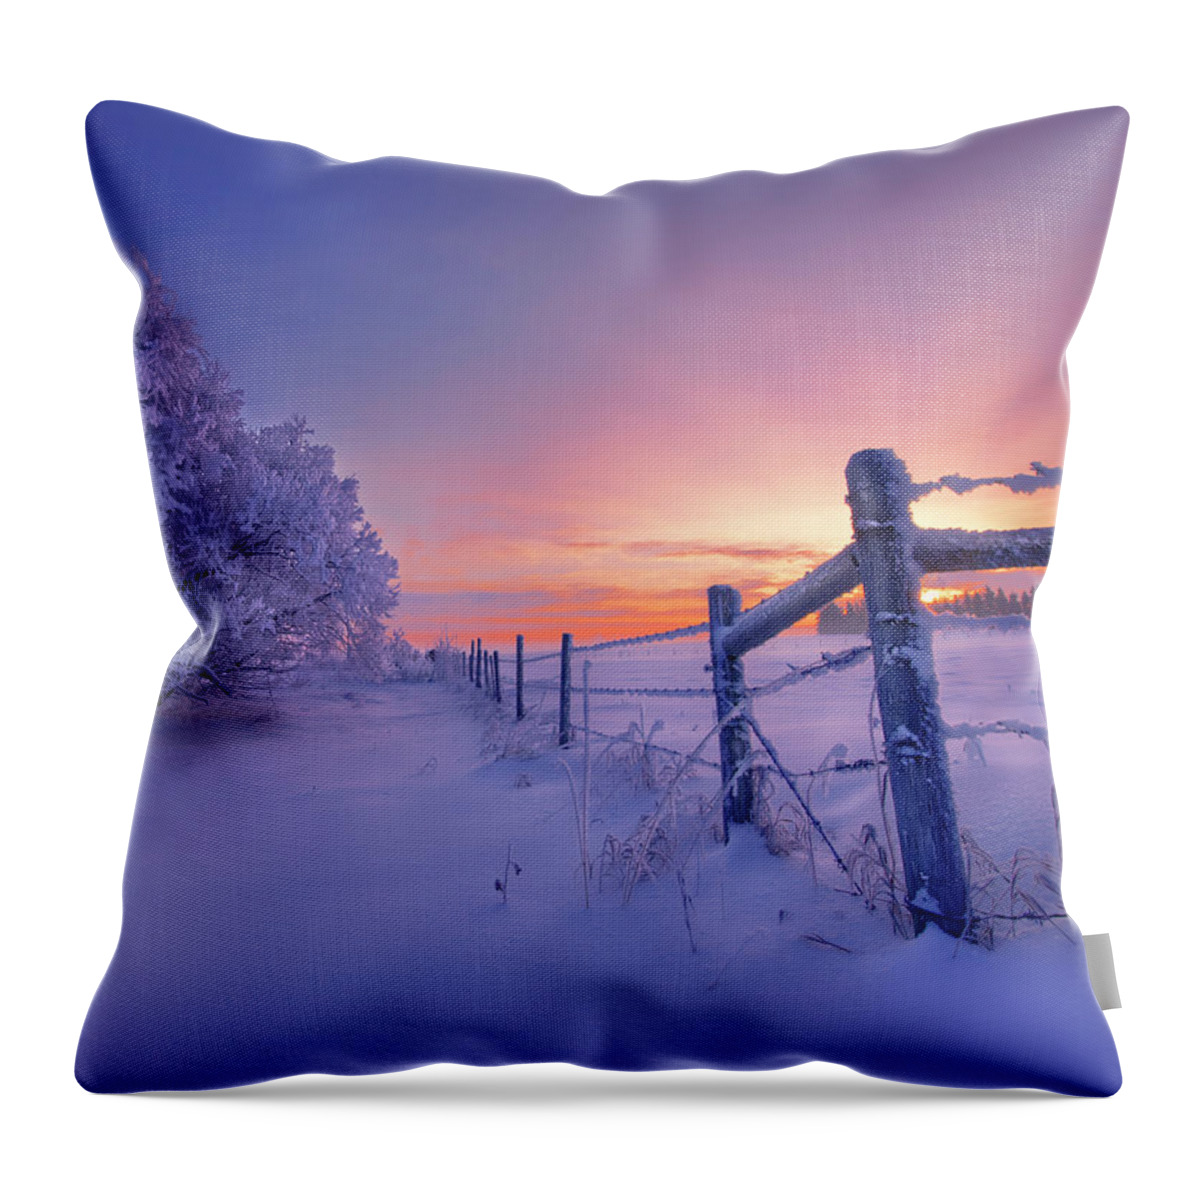 Landscape Throw Pillow featuring the photograph Winter Magic #1 by Dan Jurak